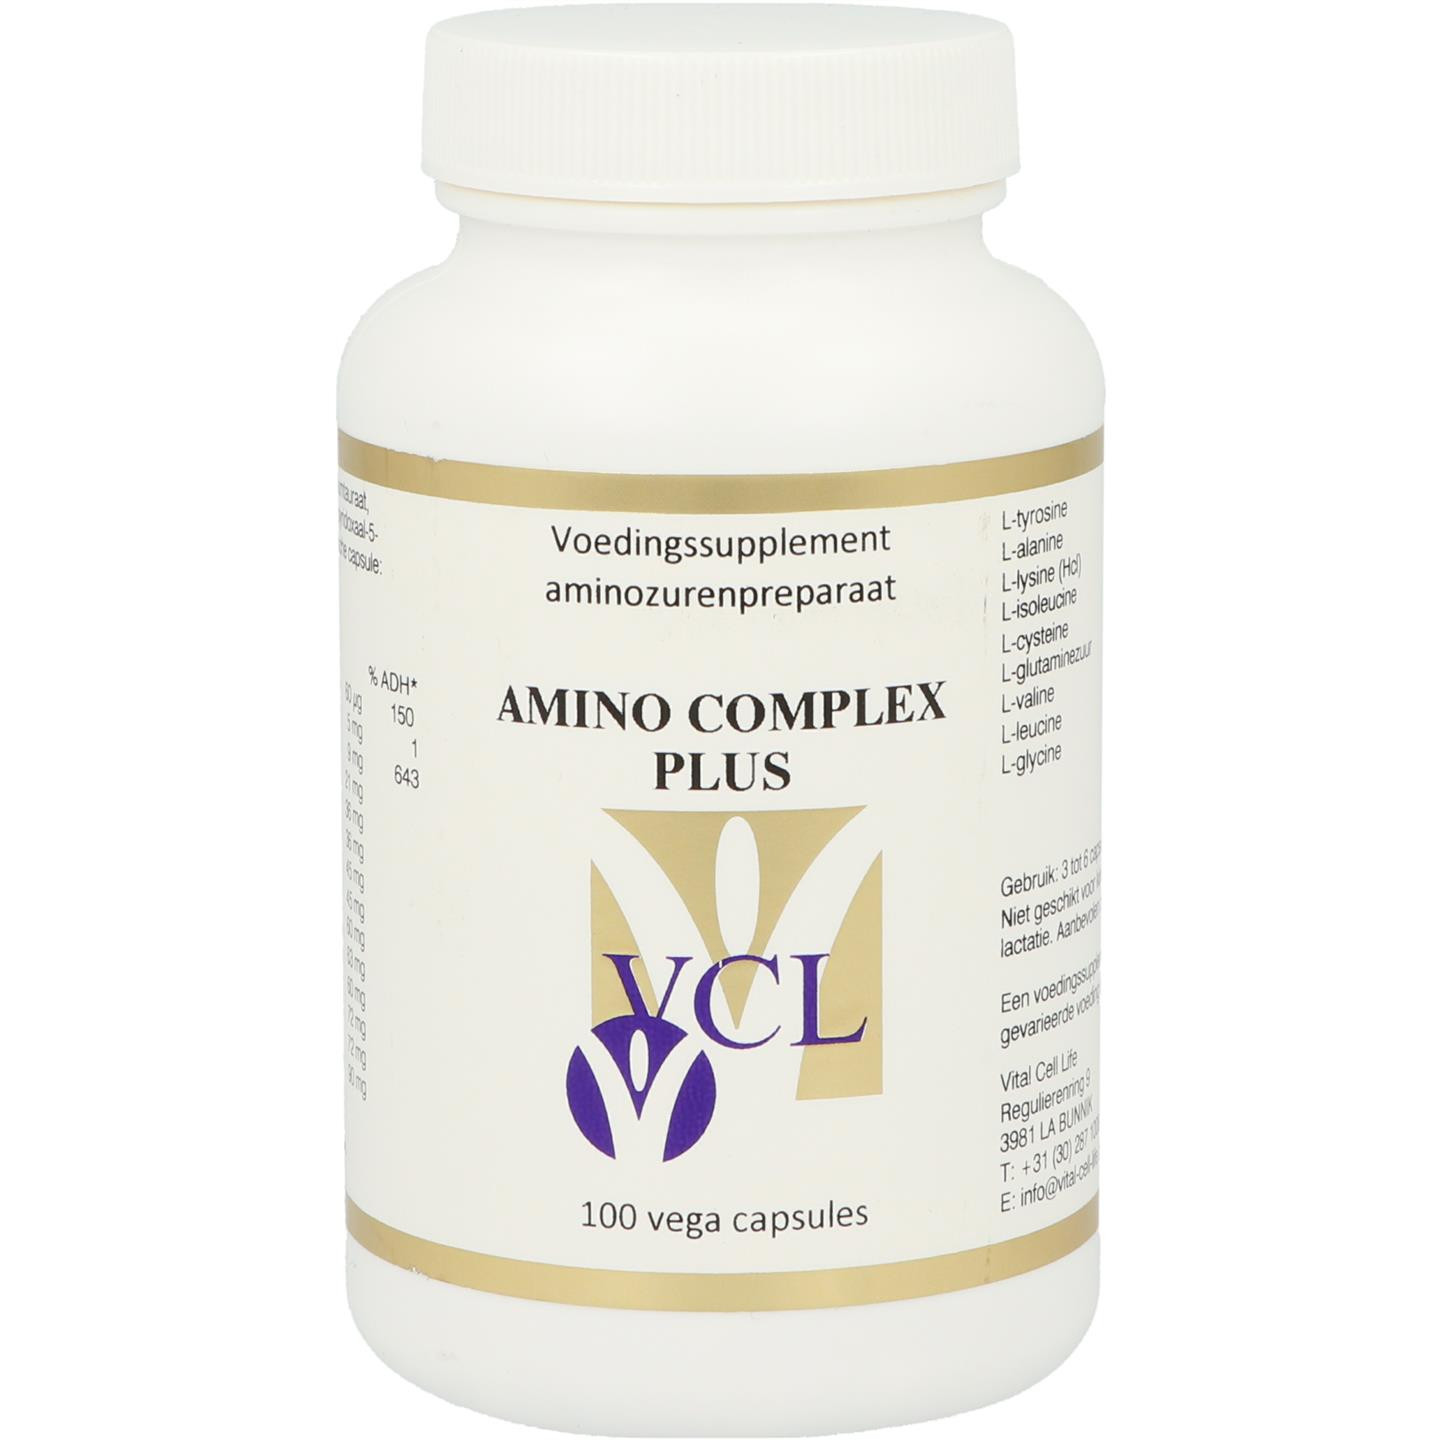 Amino complex Plus